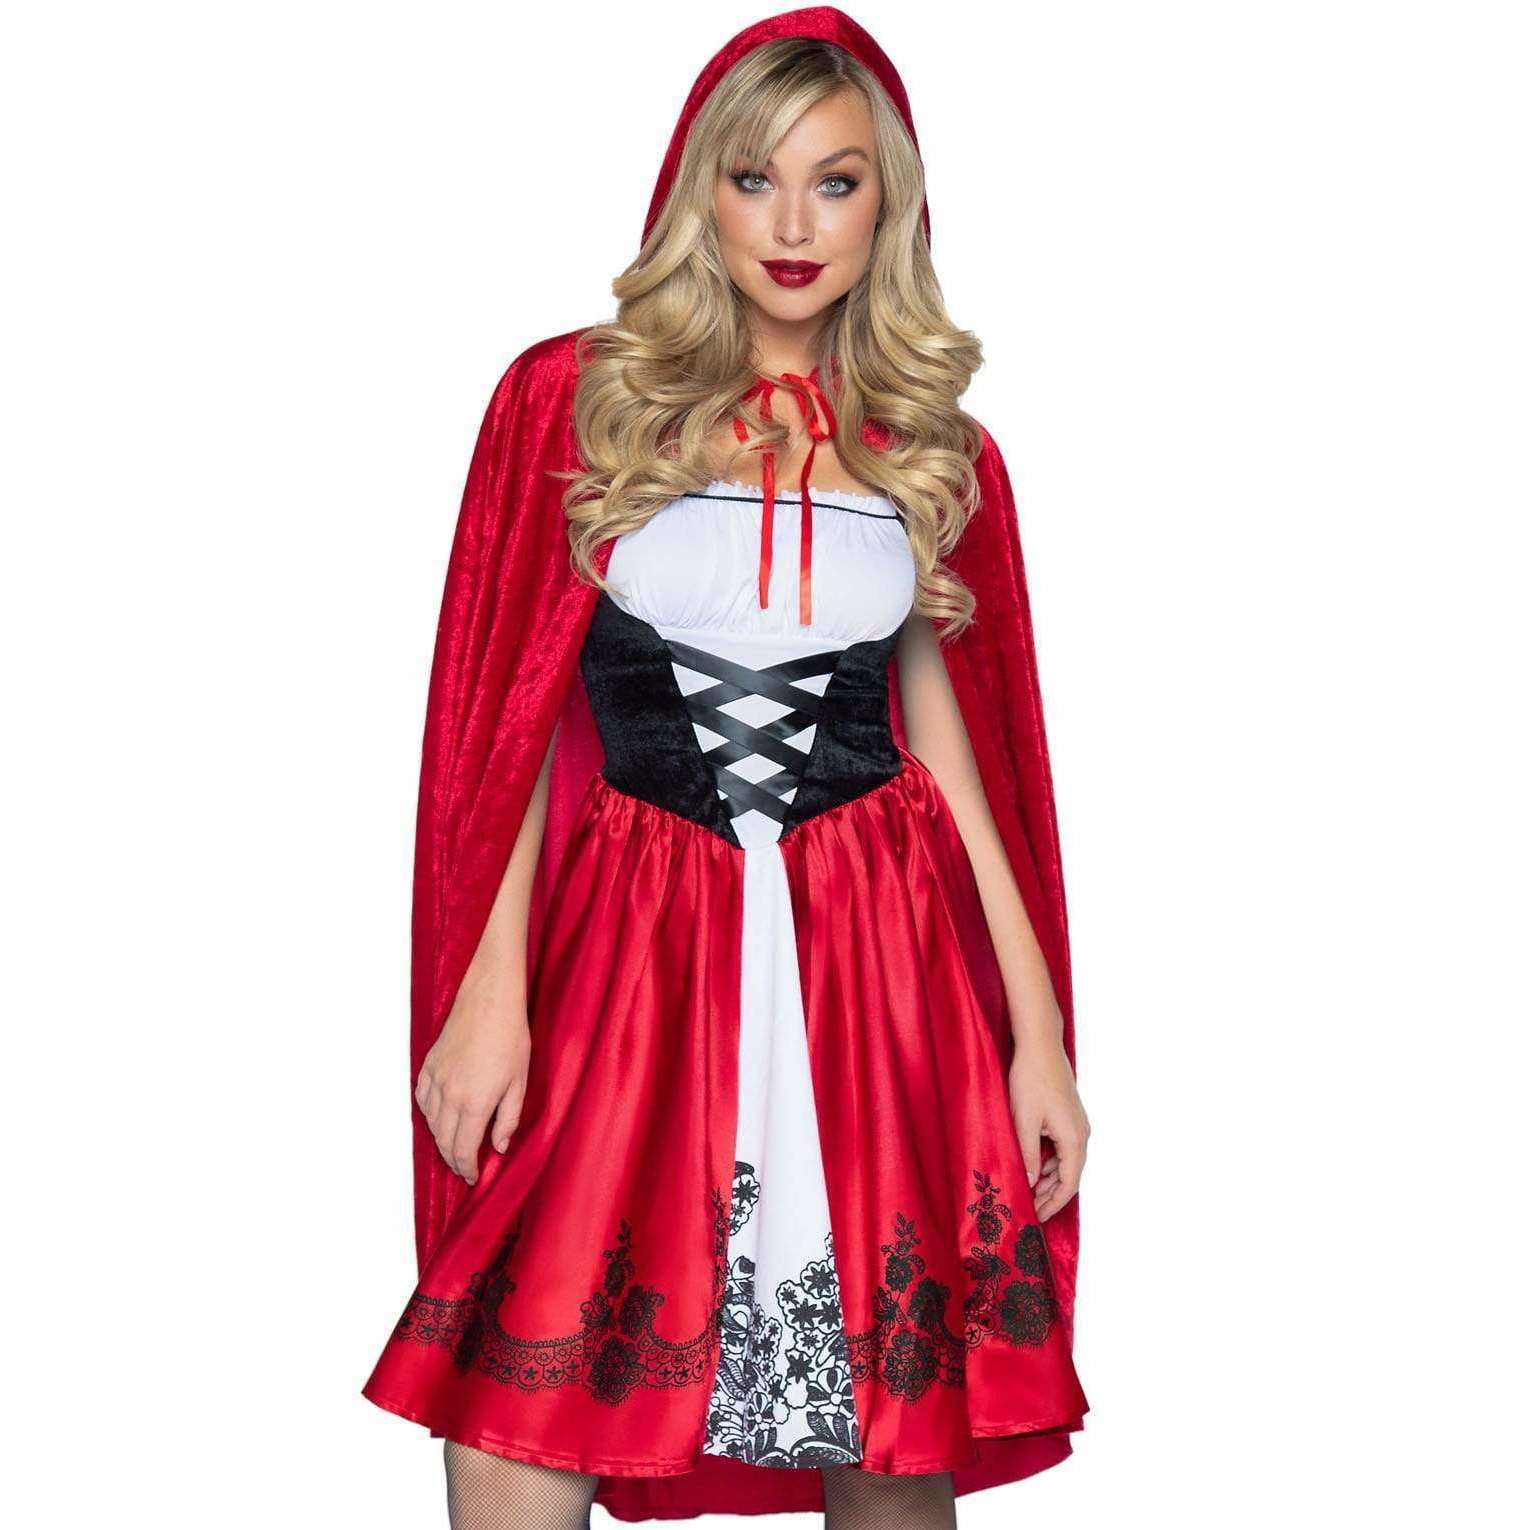 Classic Red Riding Hood Dress & Cape Adult Costume